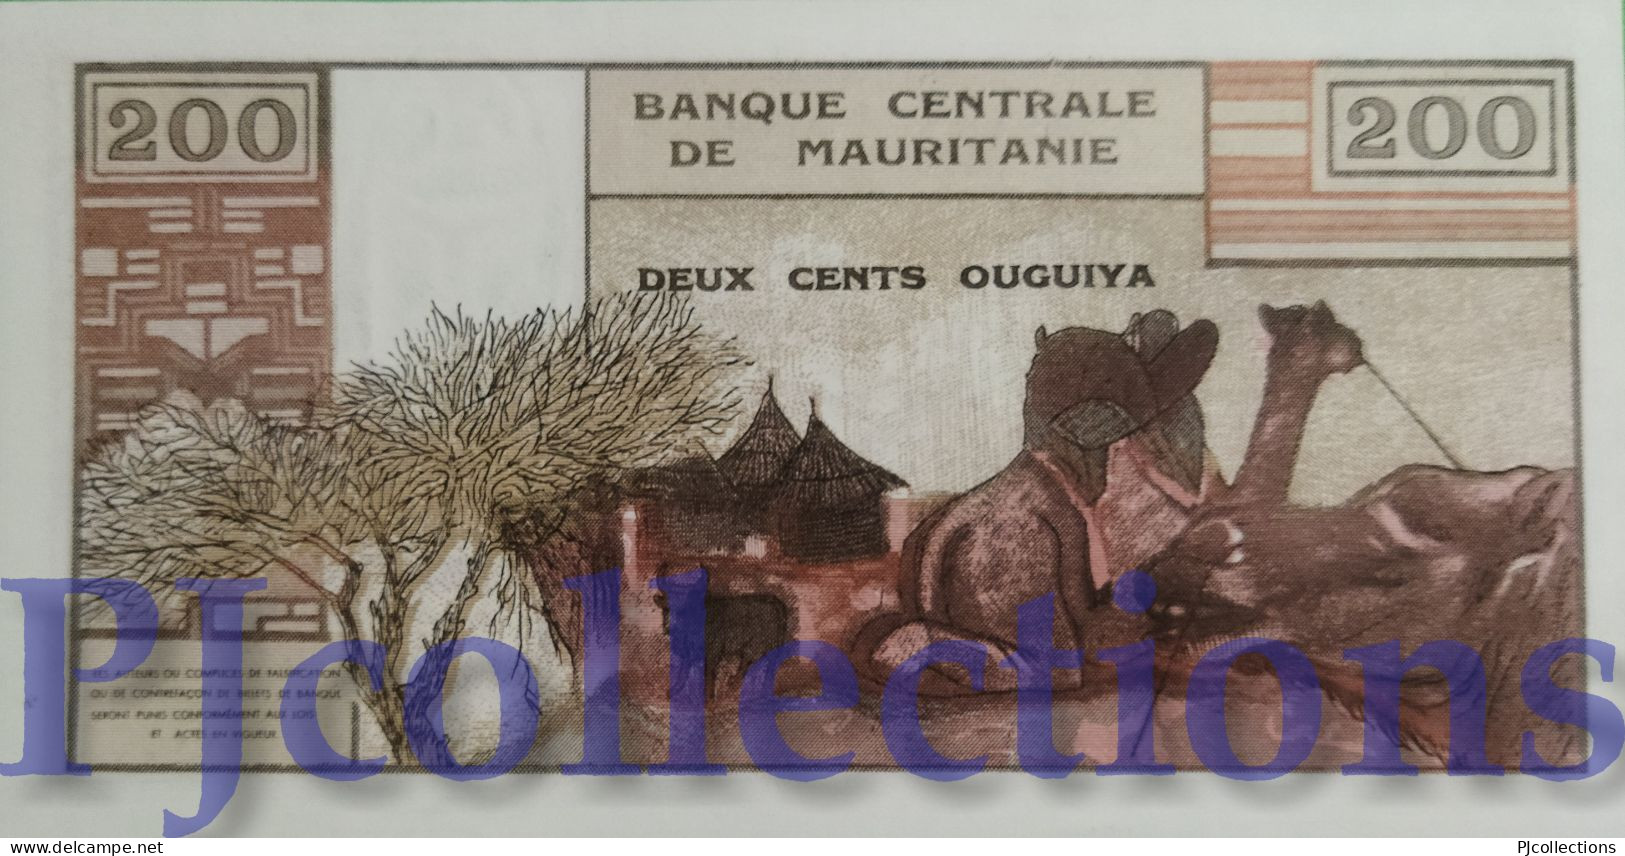 MAURITANIA 200 OUGUIYA 1973 PICK 2a UNC - Mauritania